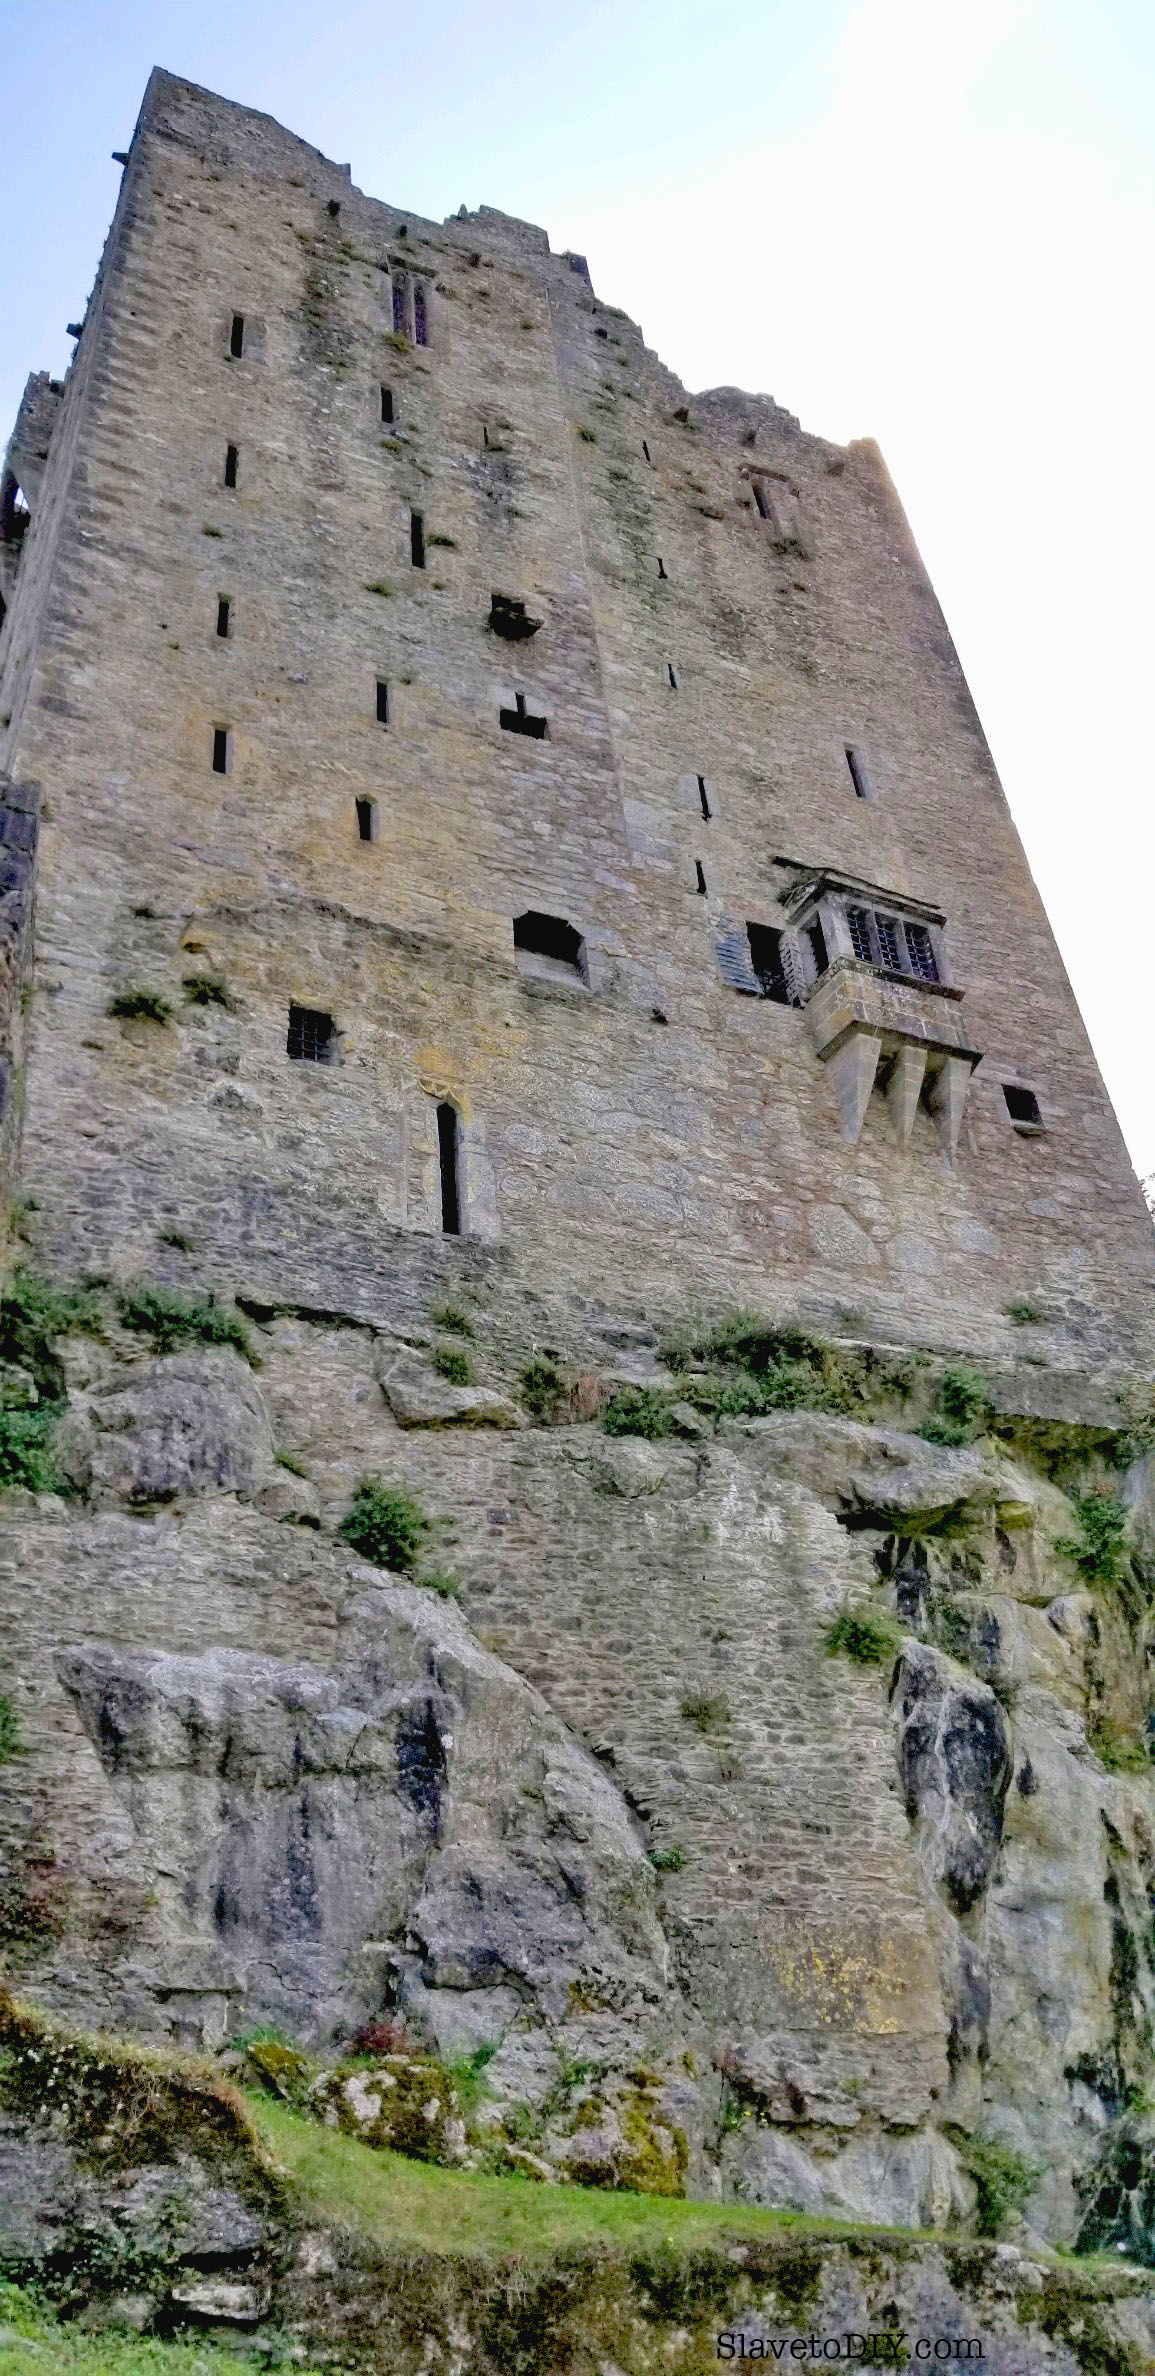 Mashup Monday: Inspired Stone Walls in Ireland